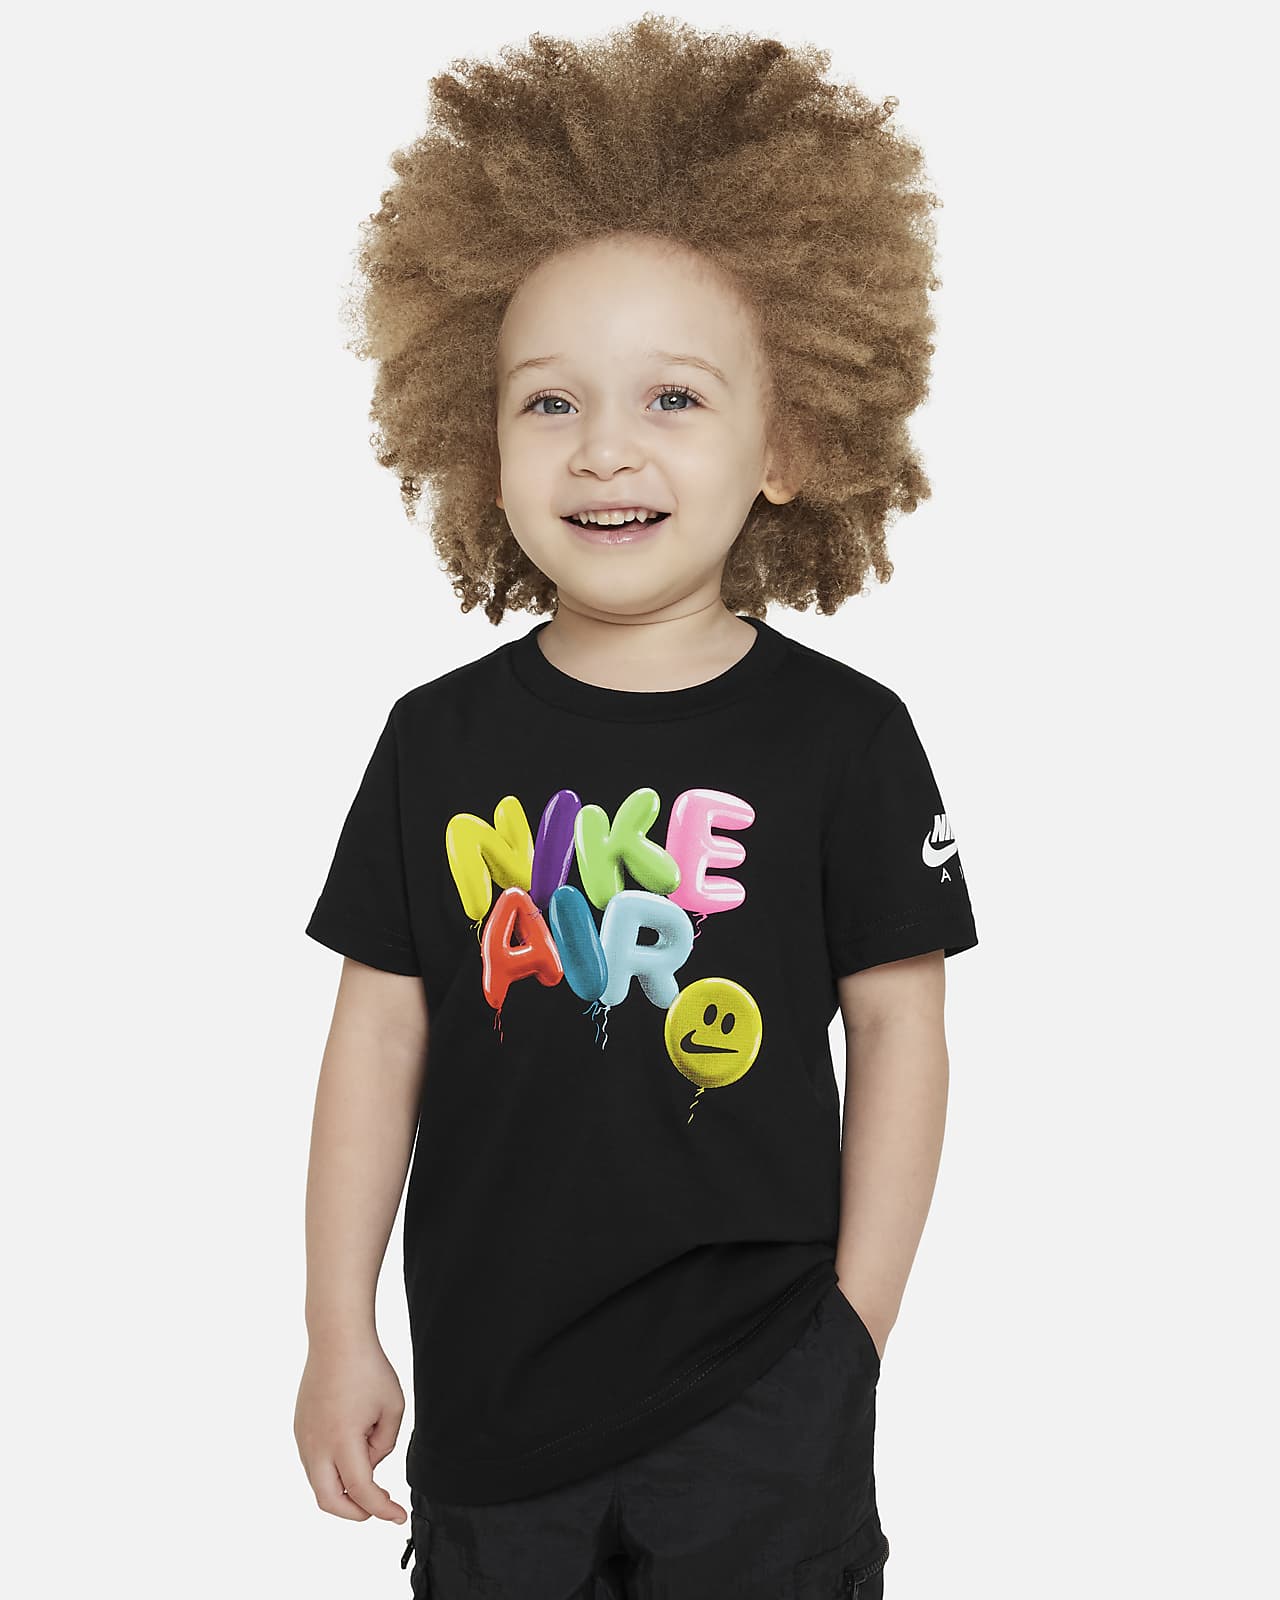 Nike Air Balloon Tee Toddler T-Shirt